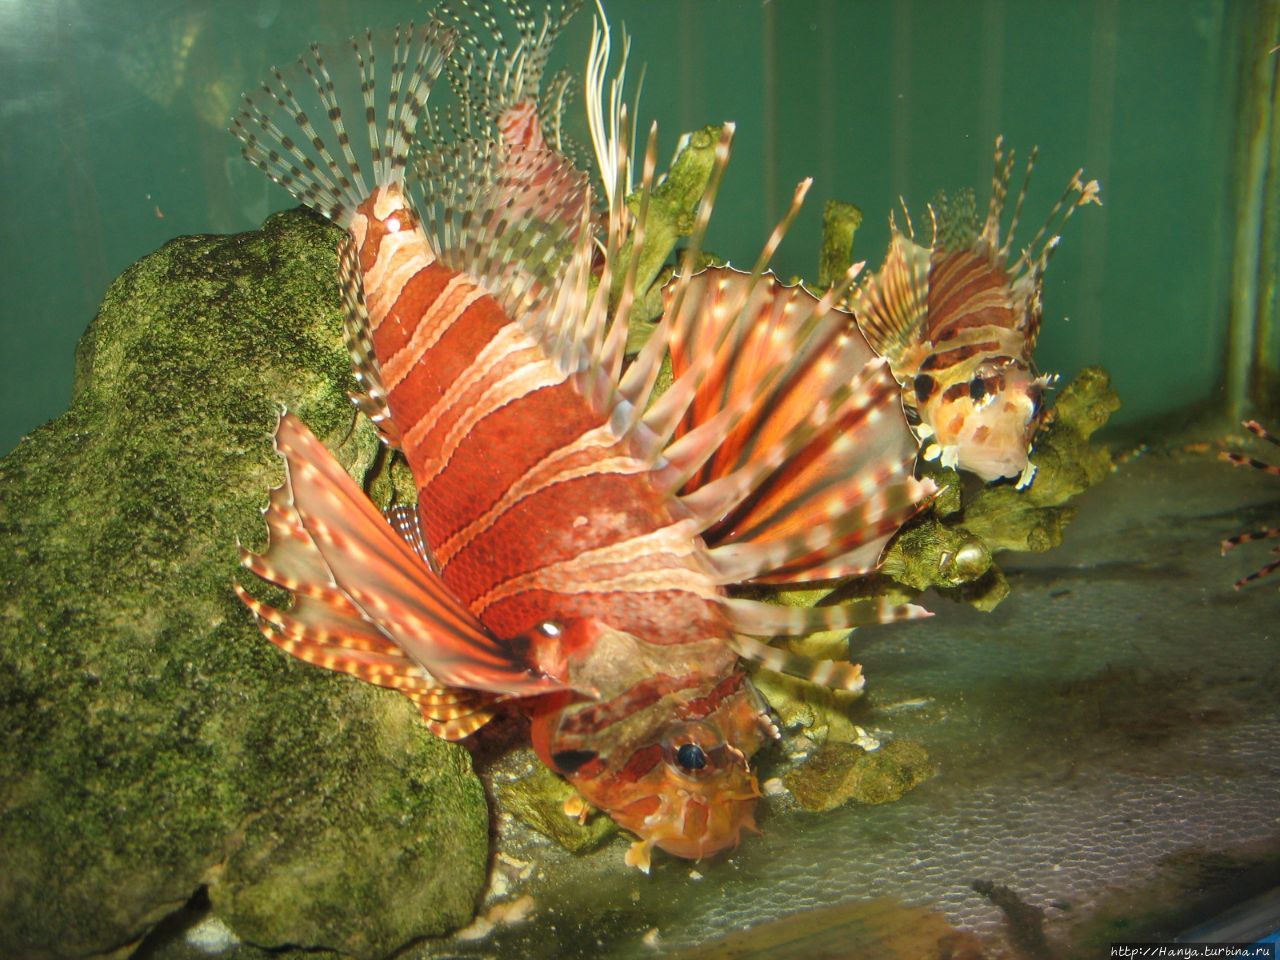 г.Нячанг. Океанографический музей. Огненная рыба-скорпион Нячанг, Вьетнам